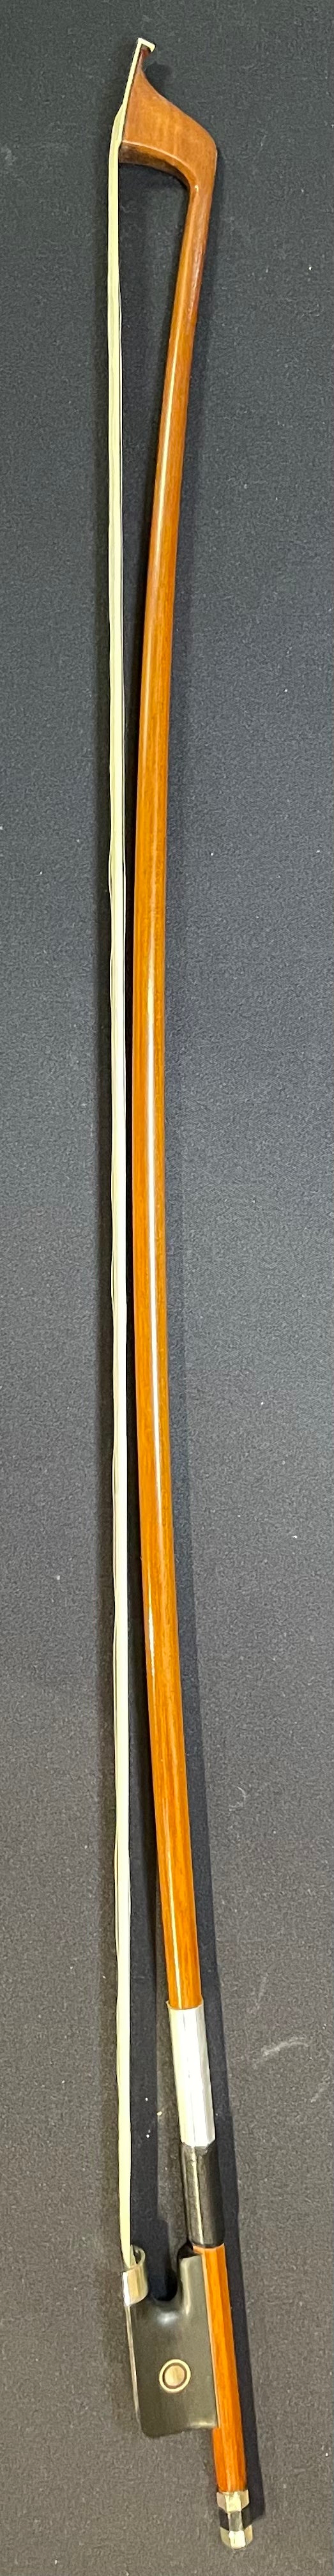 4/4 Cello Bow - XSU Wood Model